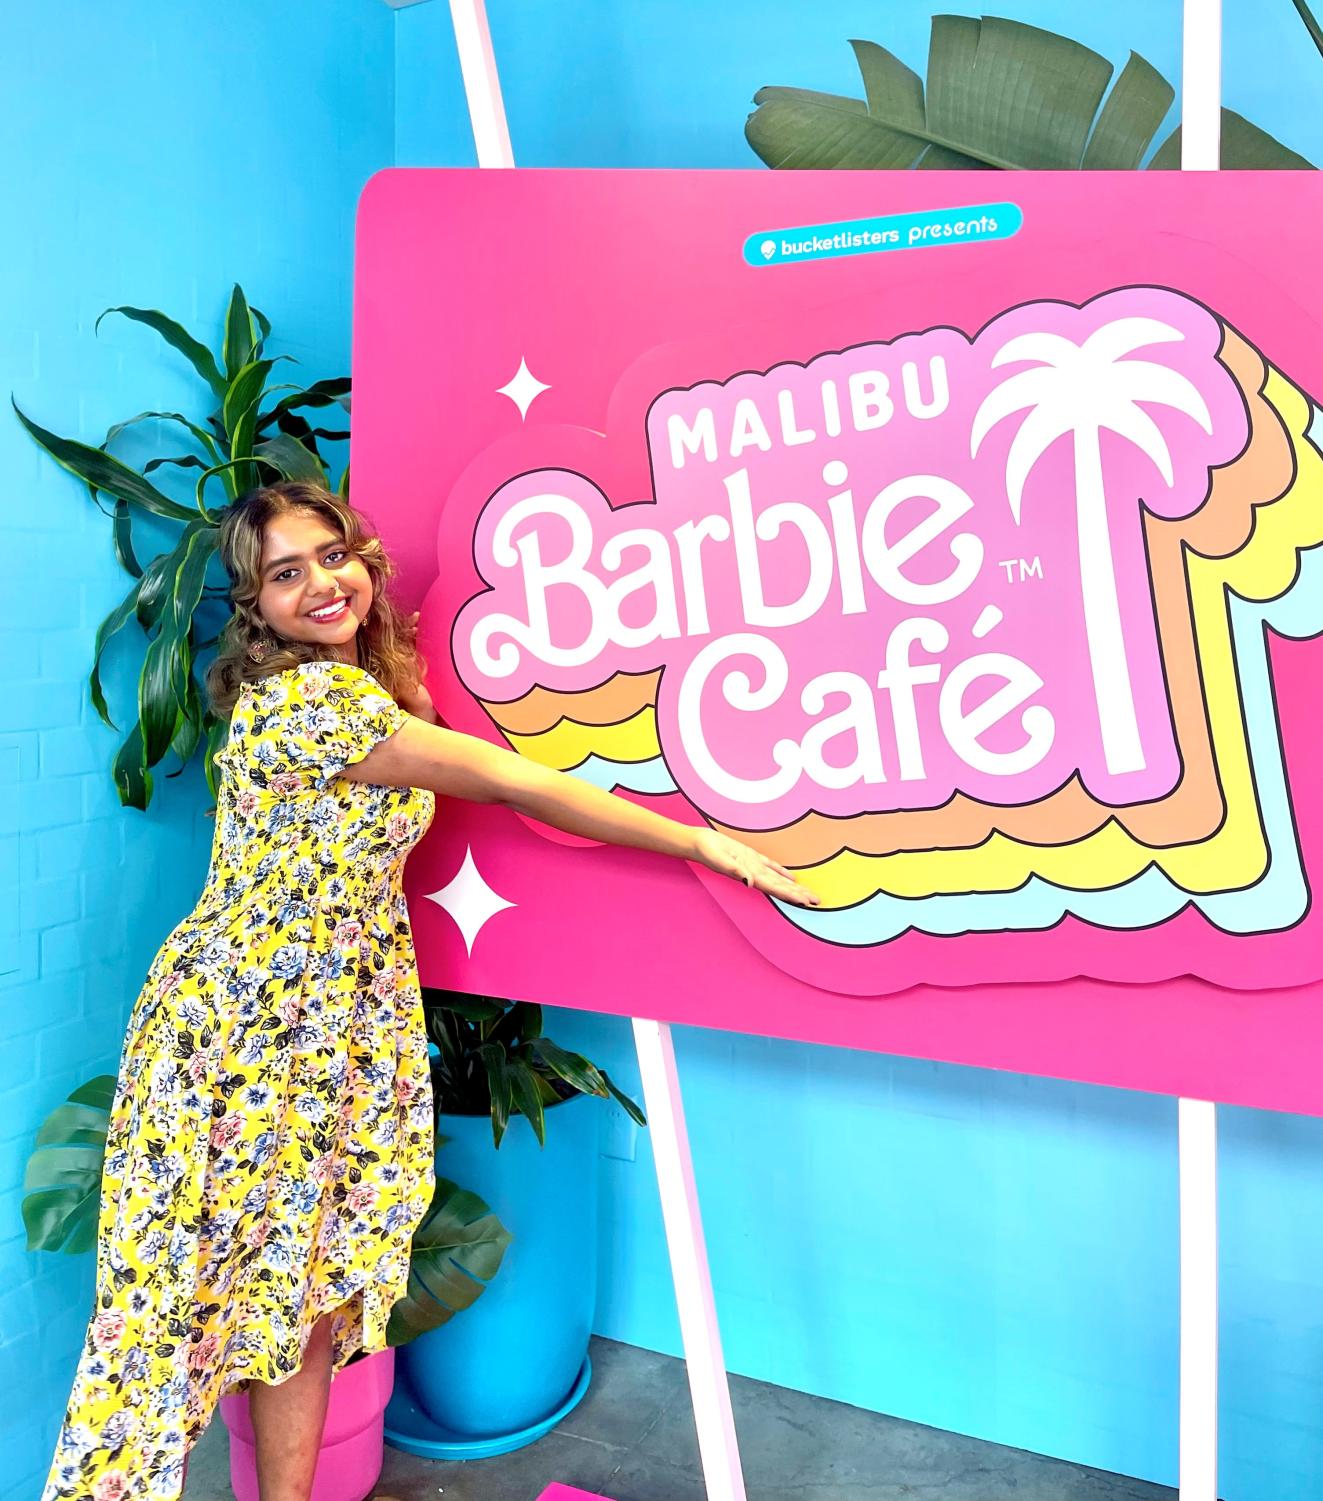 Malibu Barbie Cafe Comes to New York and Chicago